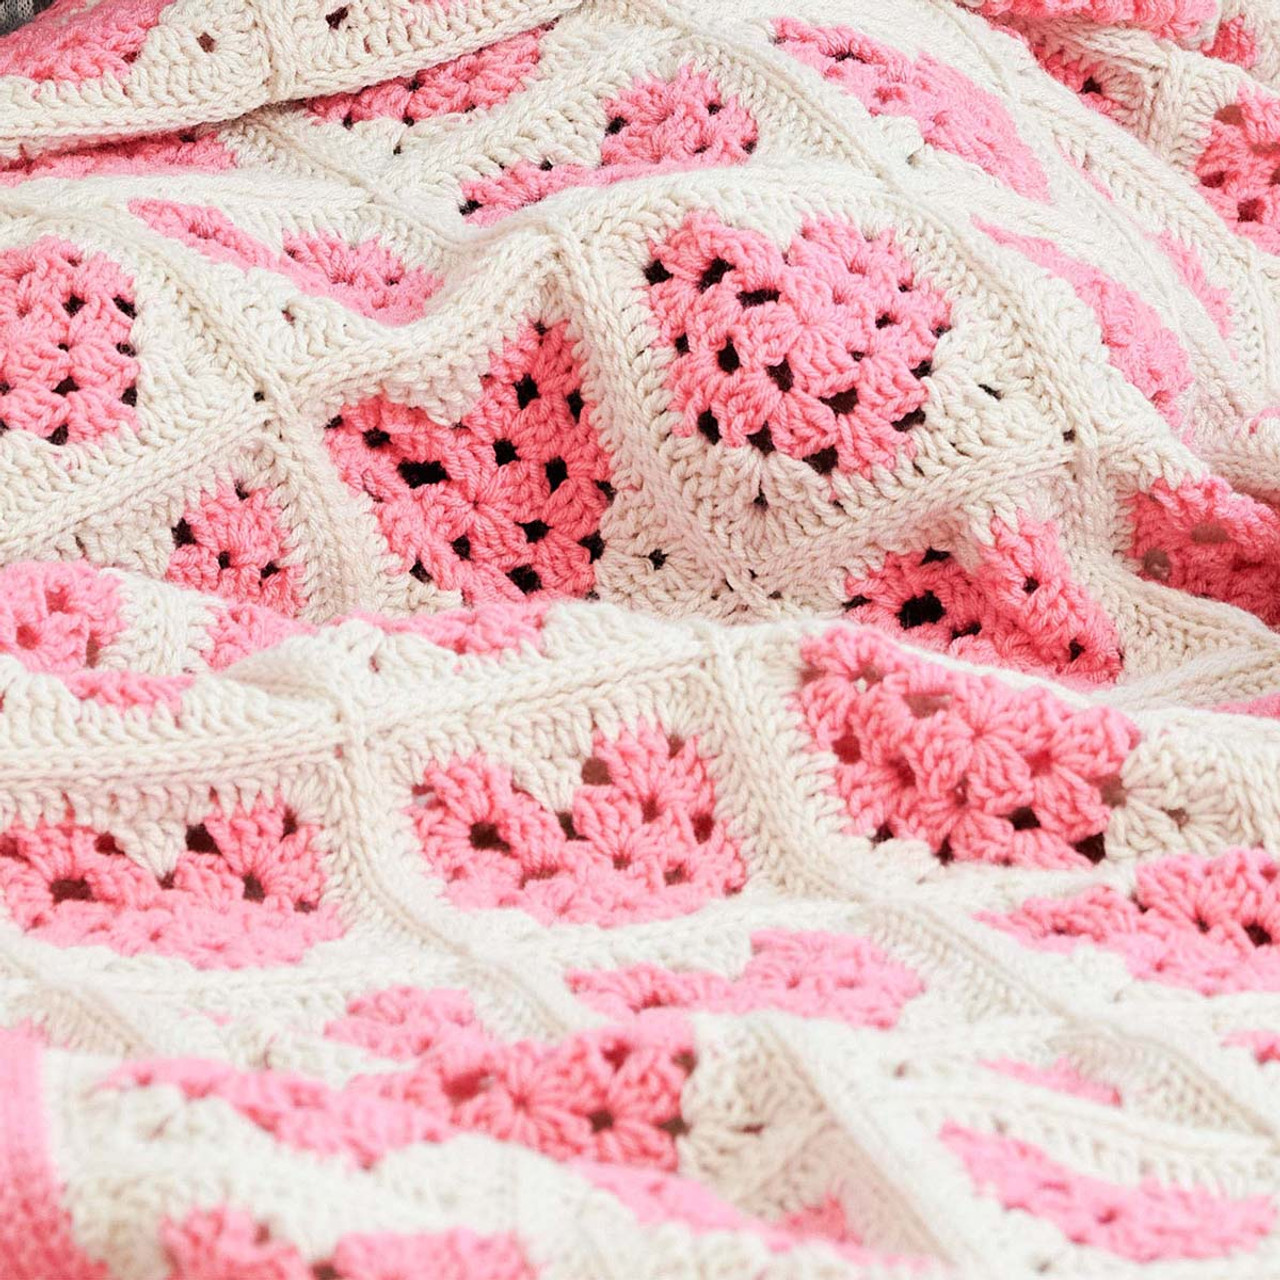 Red Heart Make A Crochet Blanket Statement